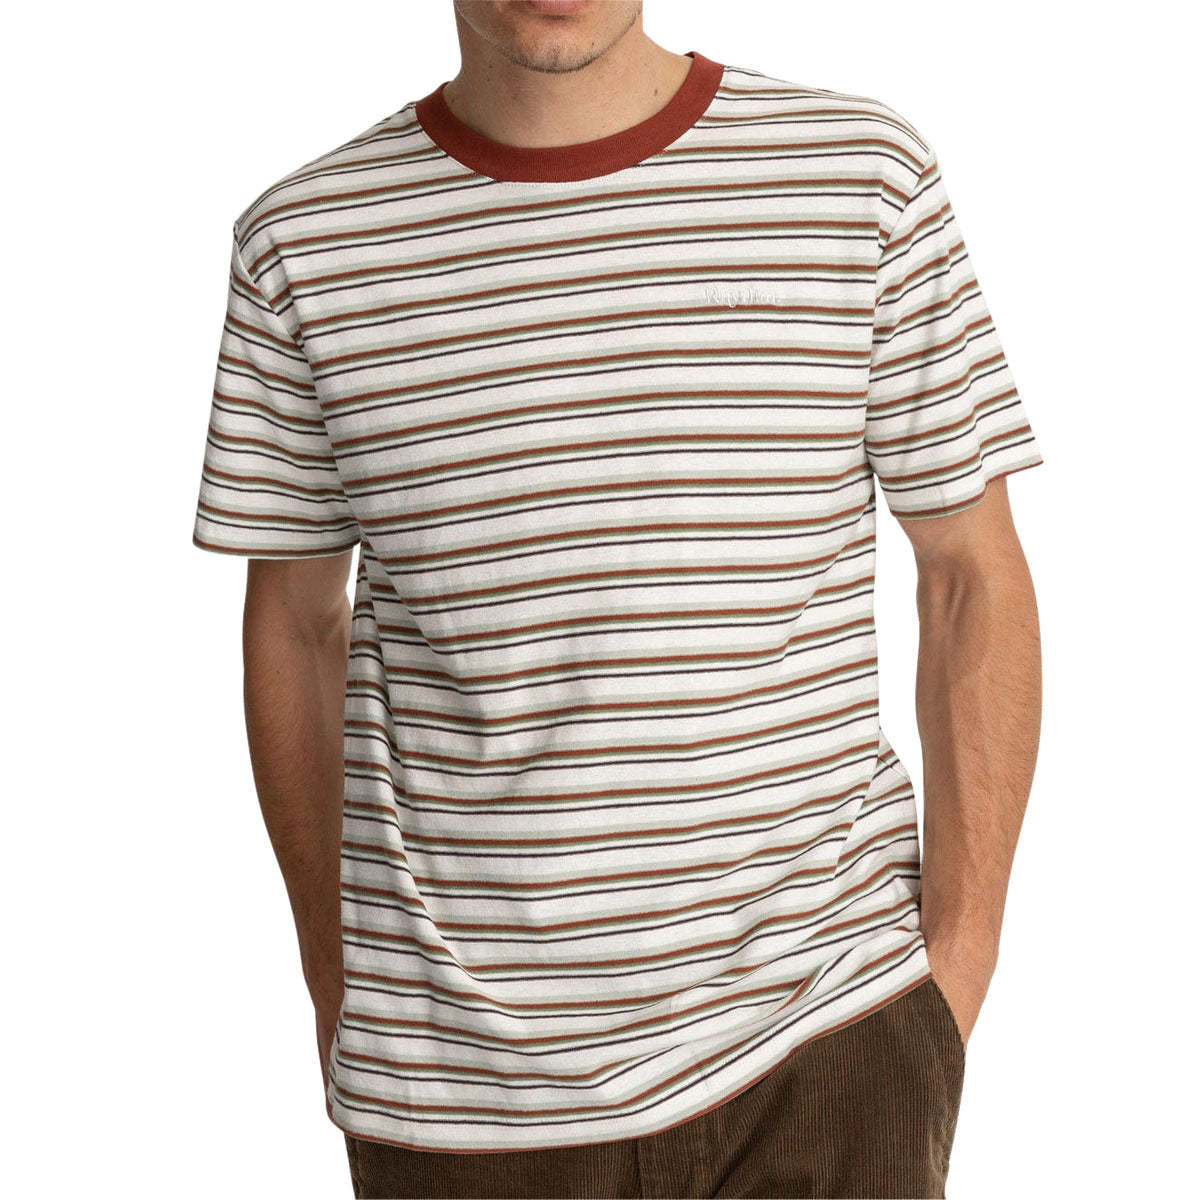 Rhythm Everyday Stripe T-Shirt - Natural/Natural image 2